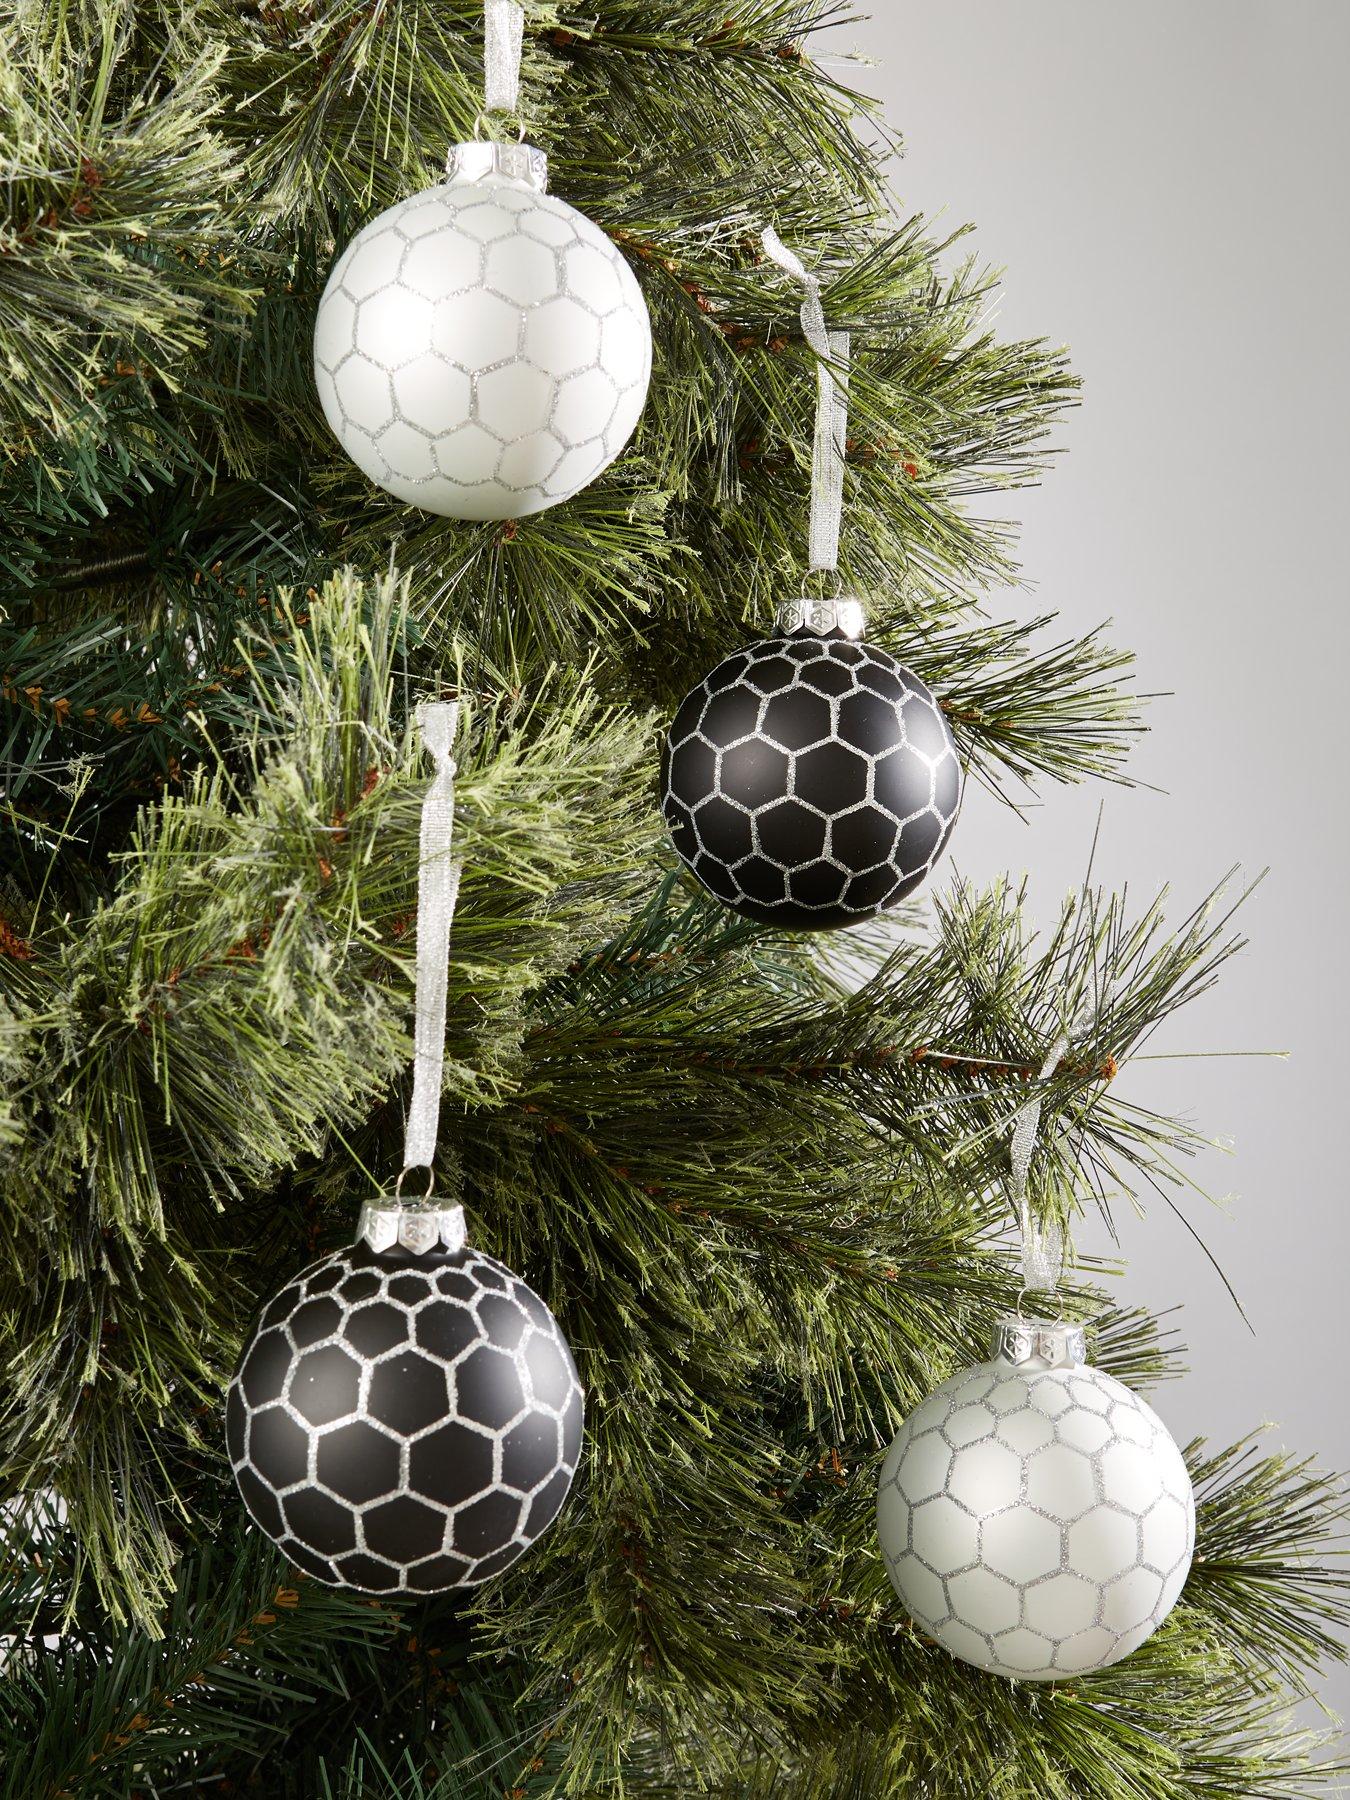 Details about   NEW 20 PCS SILVER/GOLD GLITTER BAUBLE CHRISTMAS TREE DECOR 2 COLOR BAUBLE 3.5CM 